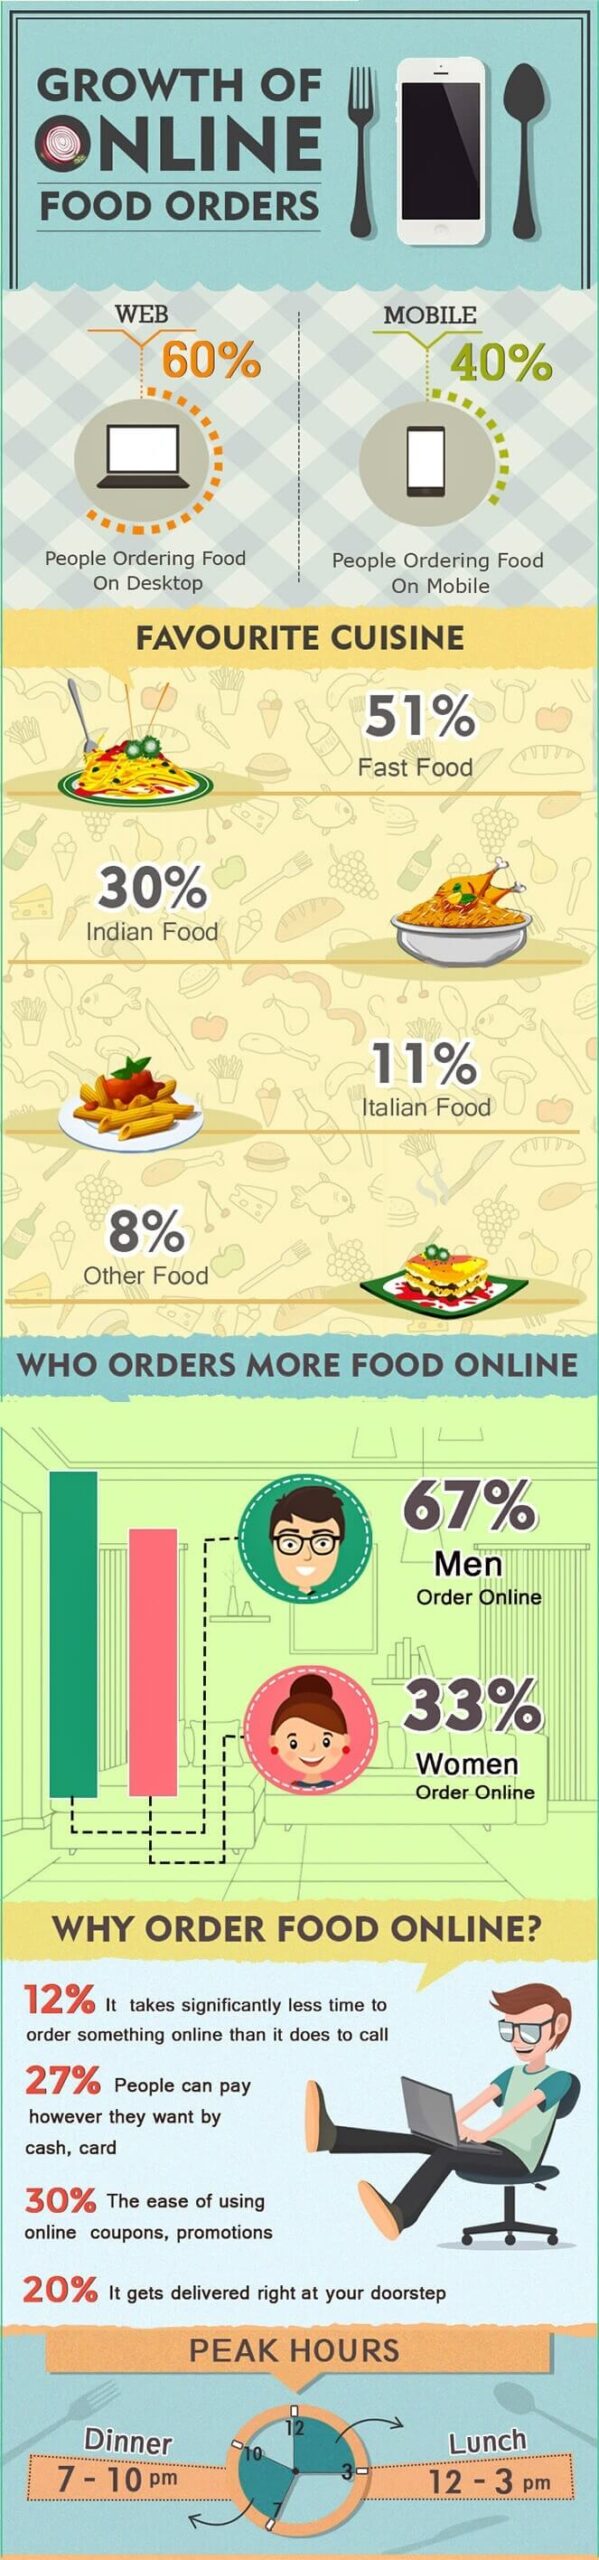 online food ordering growth